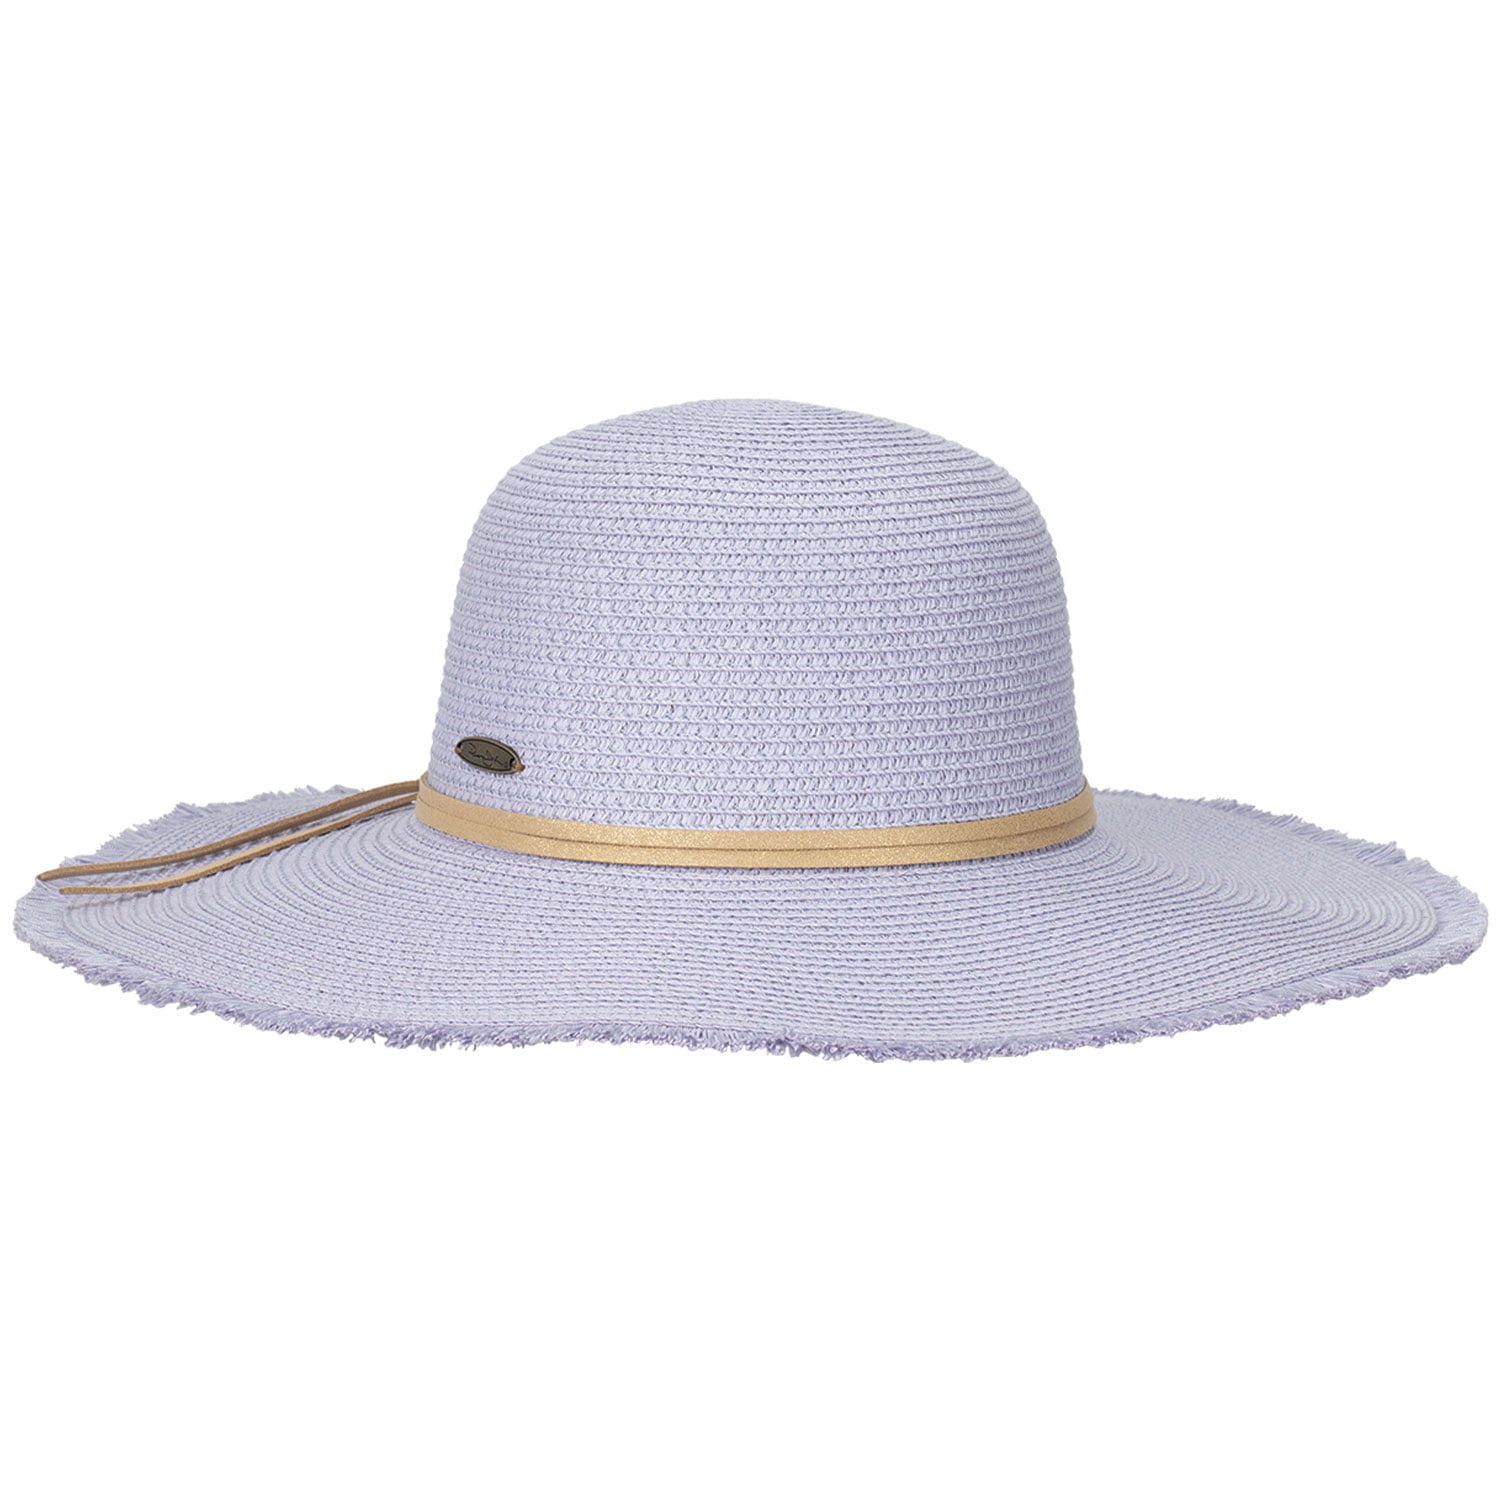 Panama Jack Women's Sun Hat - Straw Paper Braid, Packable, UPF (SPF) 50+  UVA/UVB Sun Protection, 4 1/2 Big Brim (Lavender) 